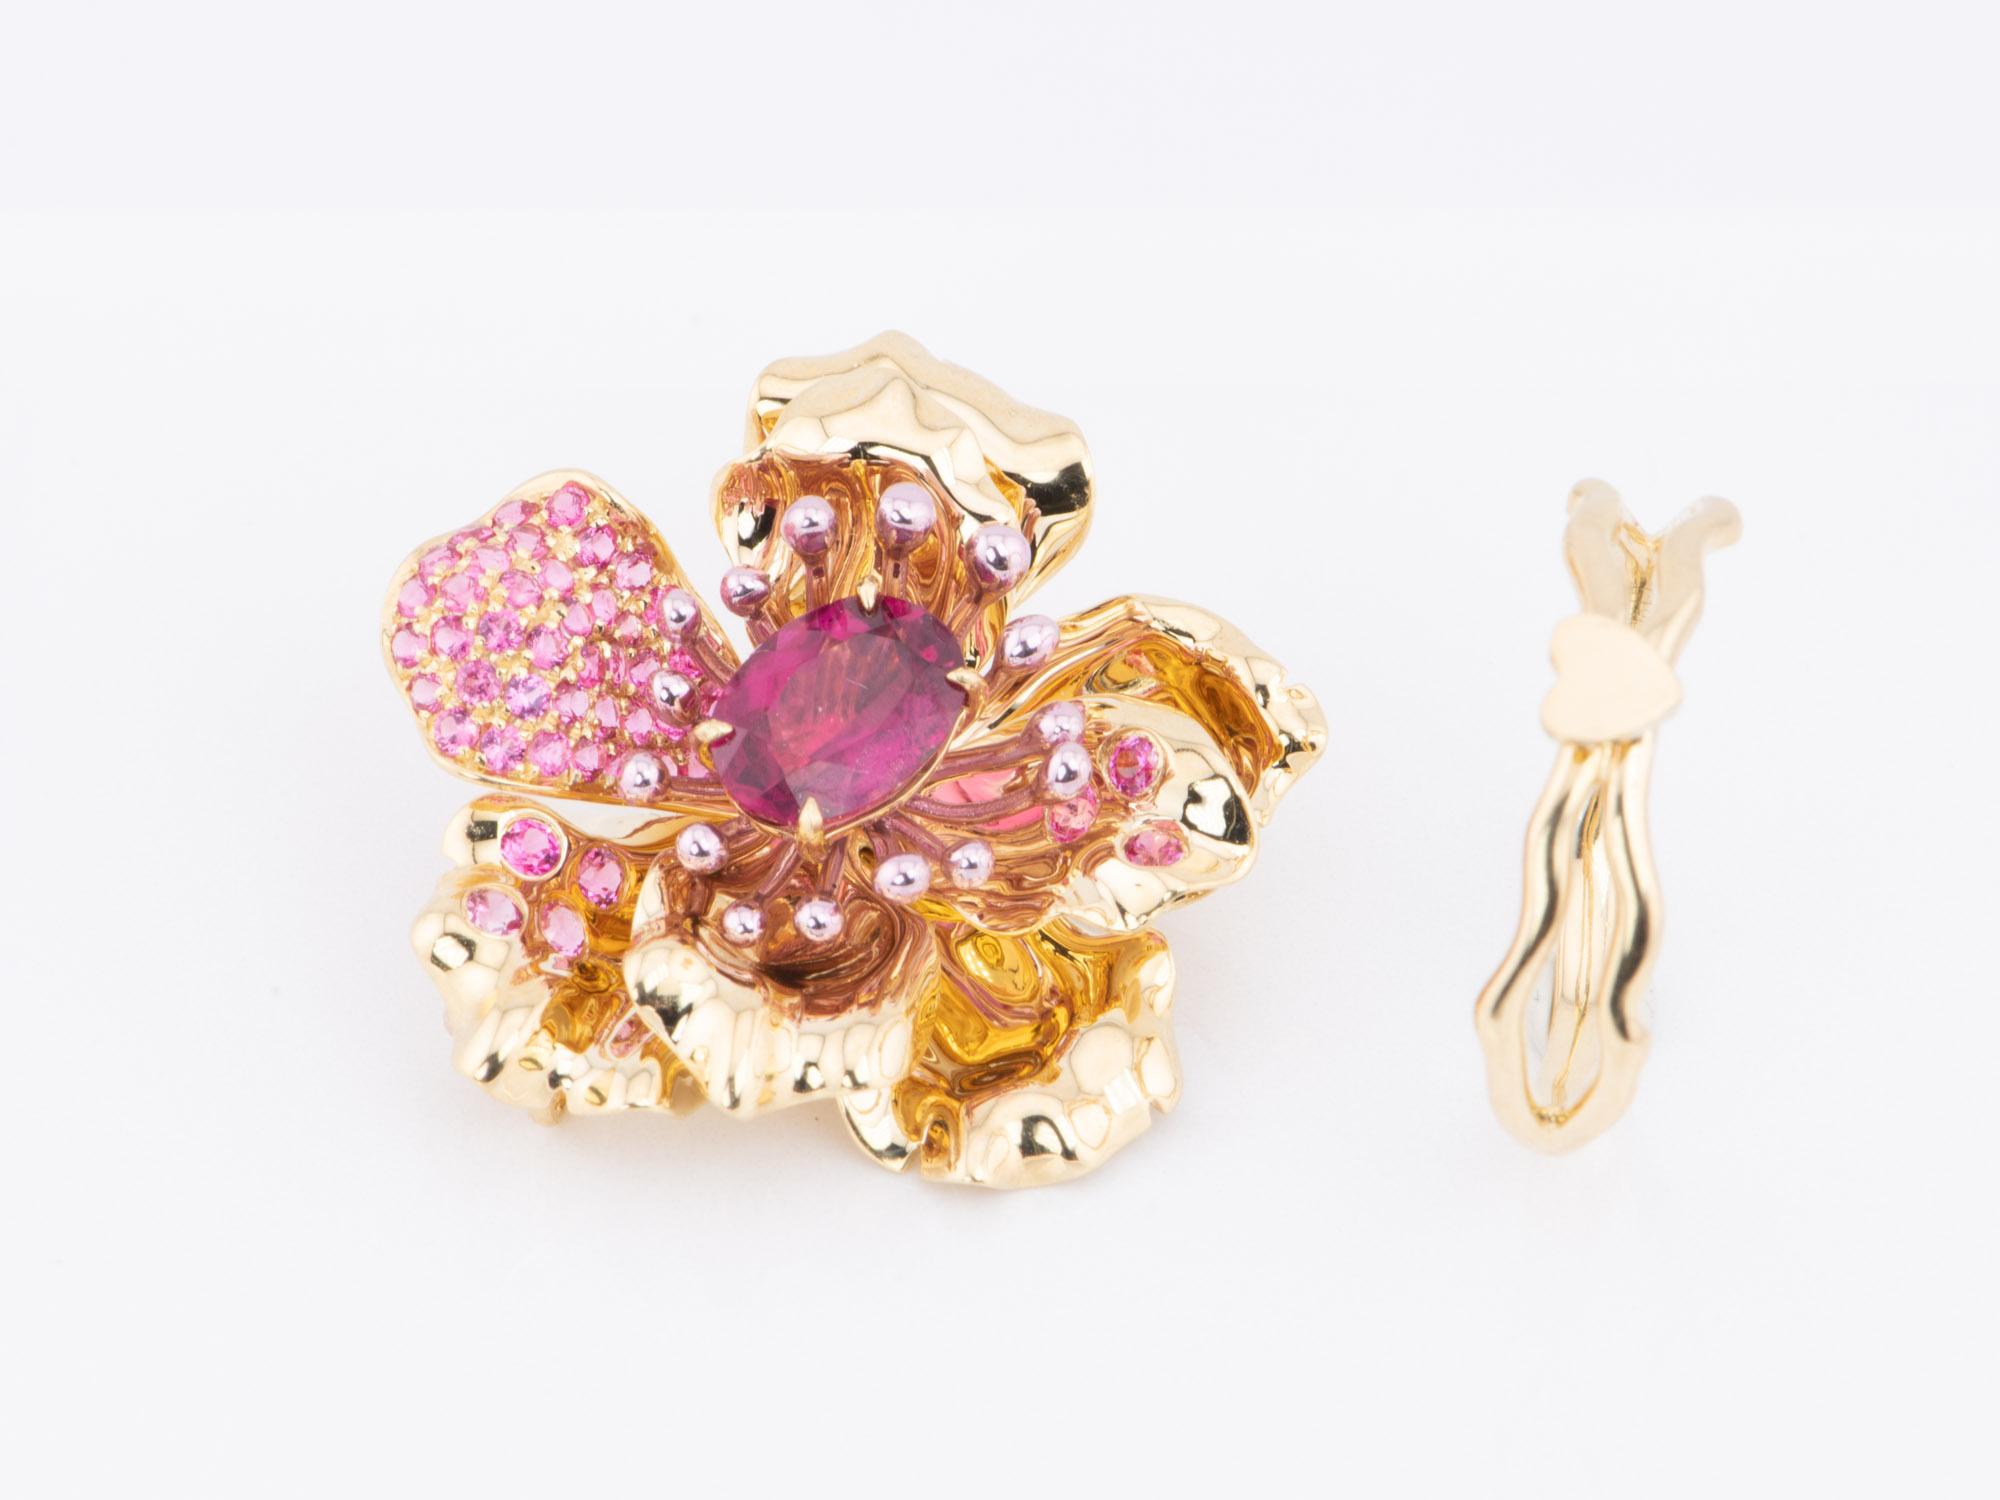 Art Jewelry Rubellite Tourmaline Center Flower Ring / Pendant 18K Gold R6641 For Sale 9